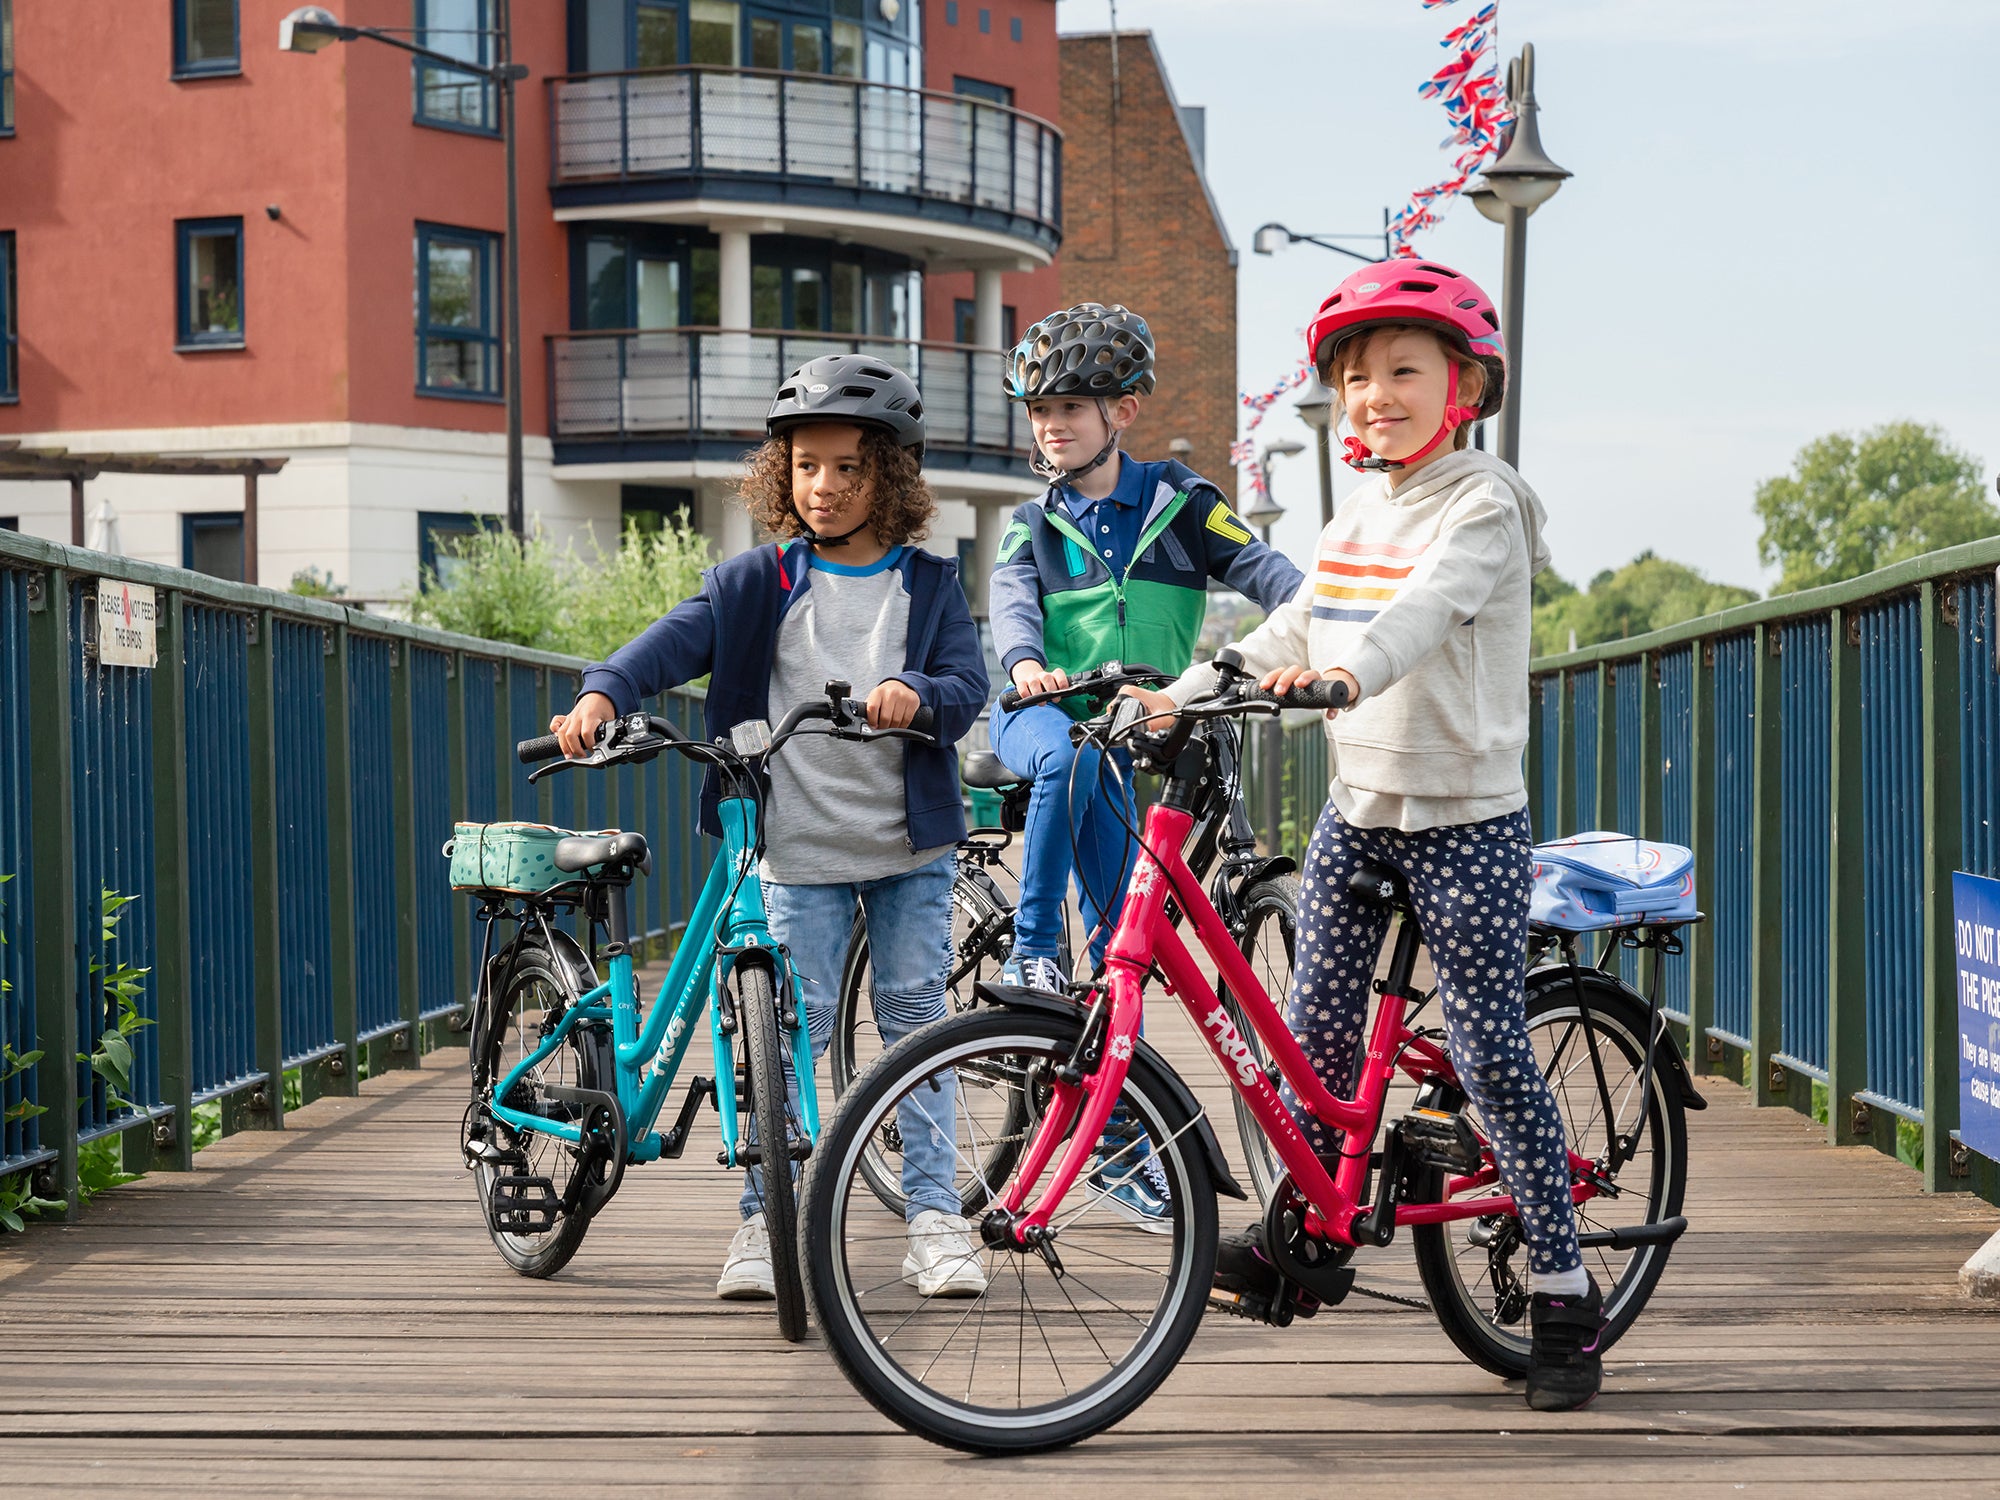 Children in town with bikes - Bike Club